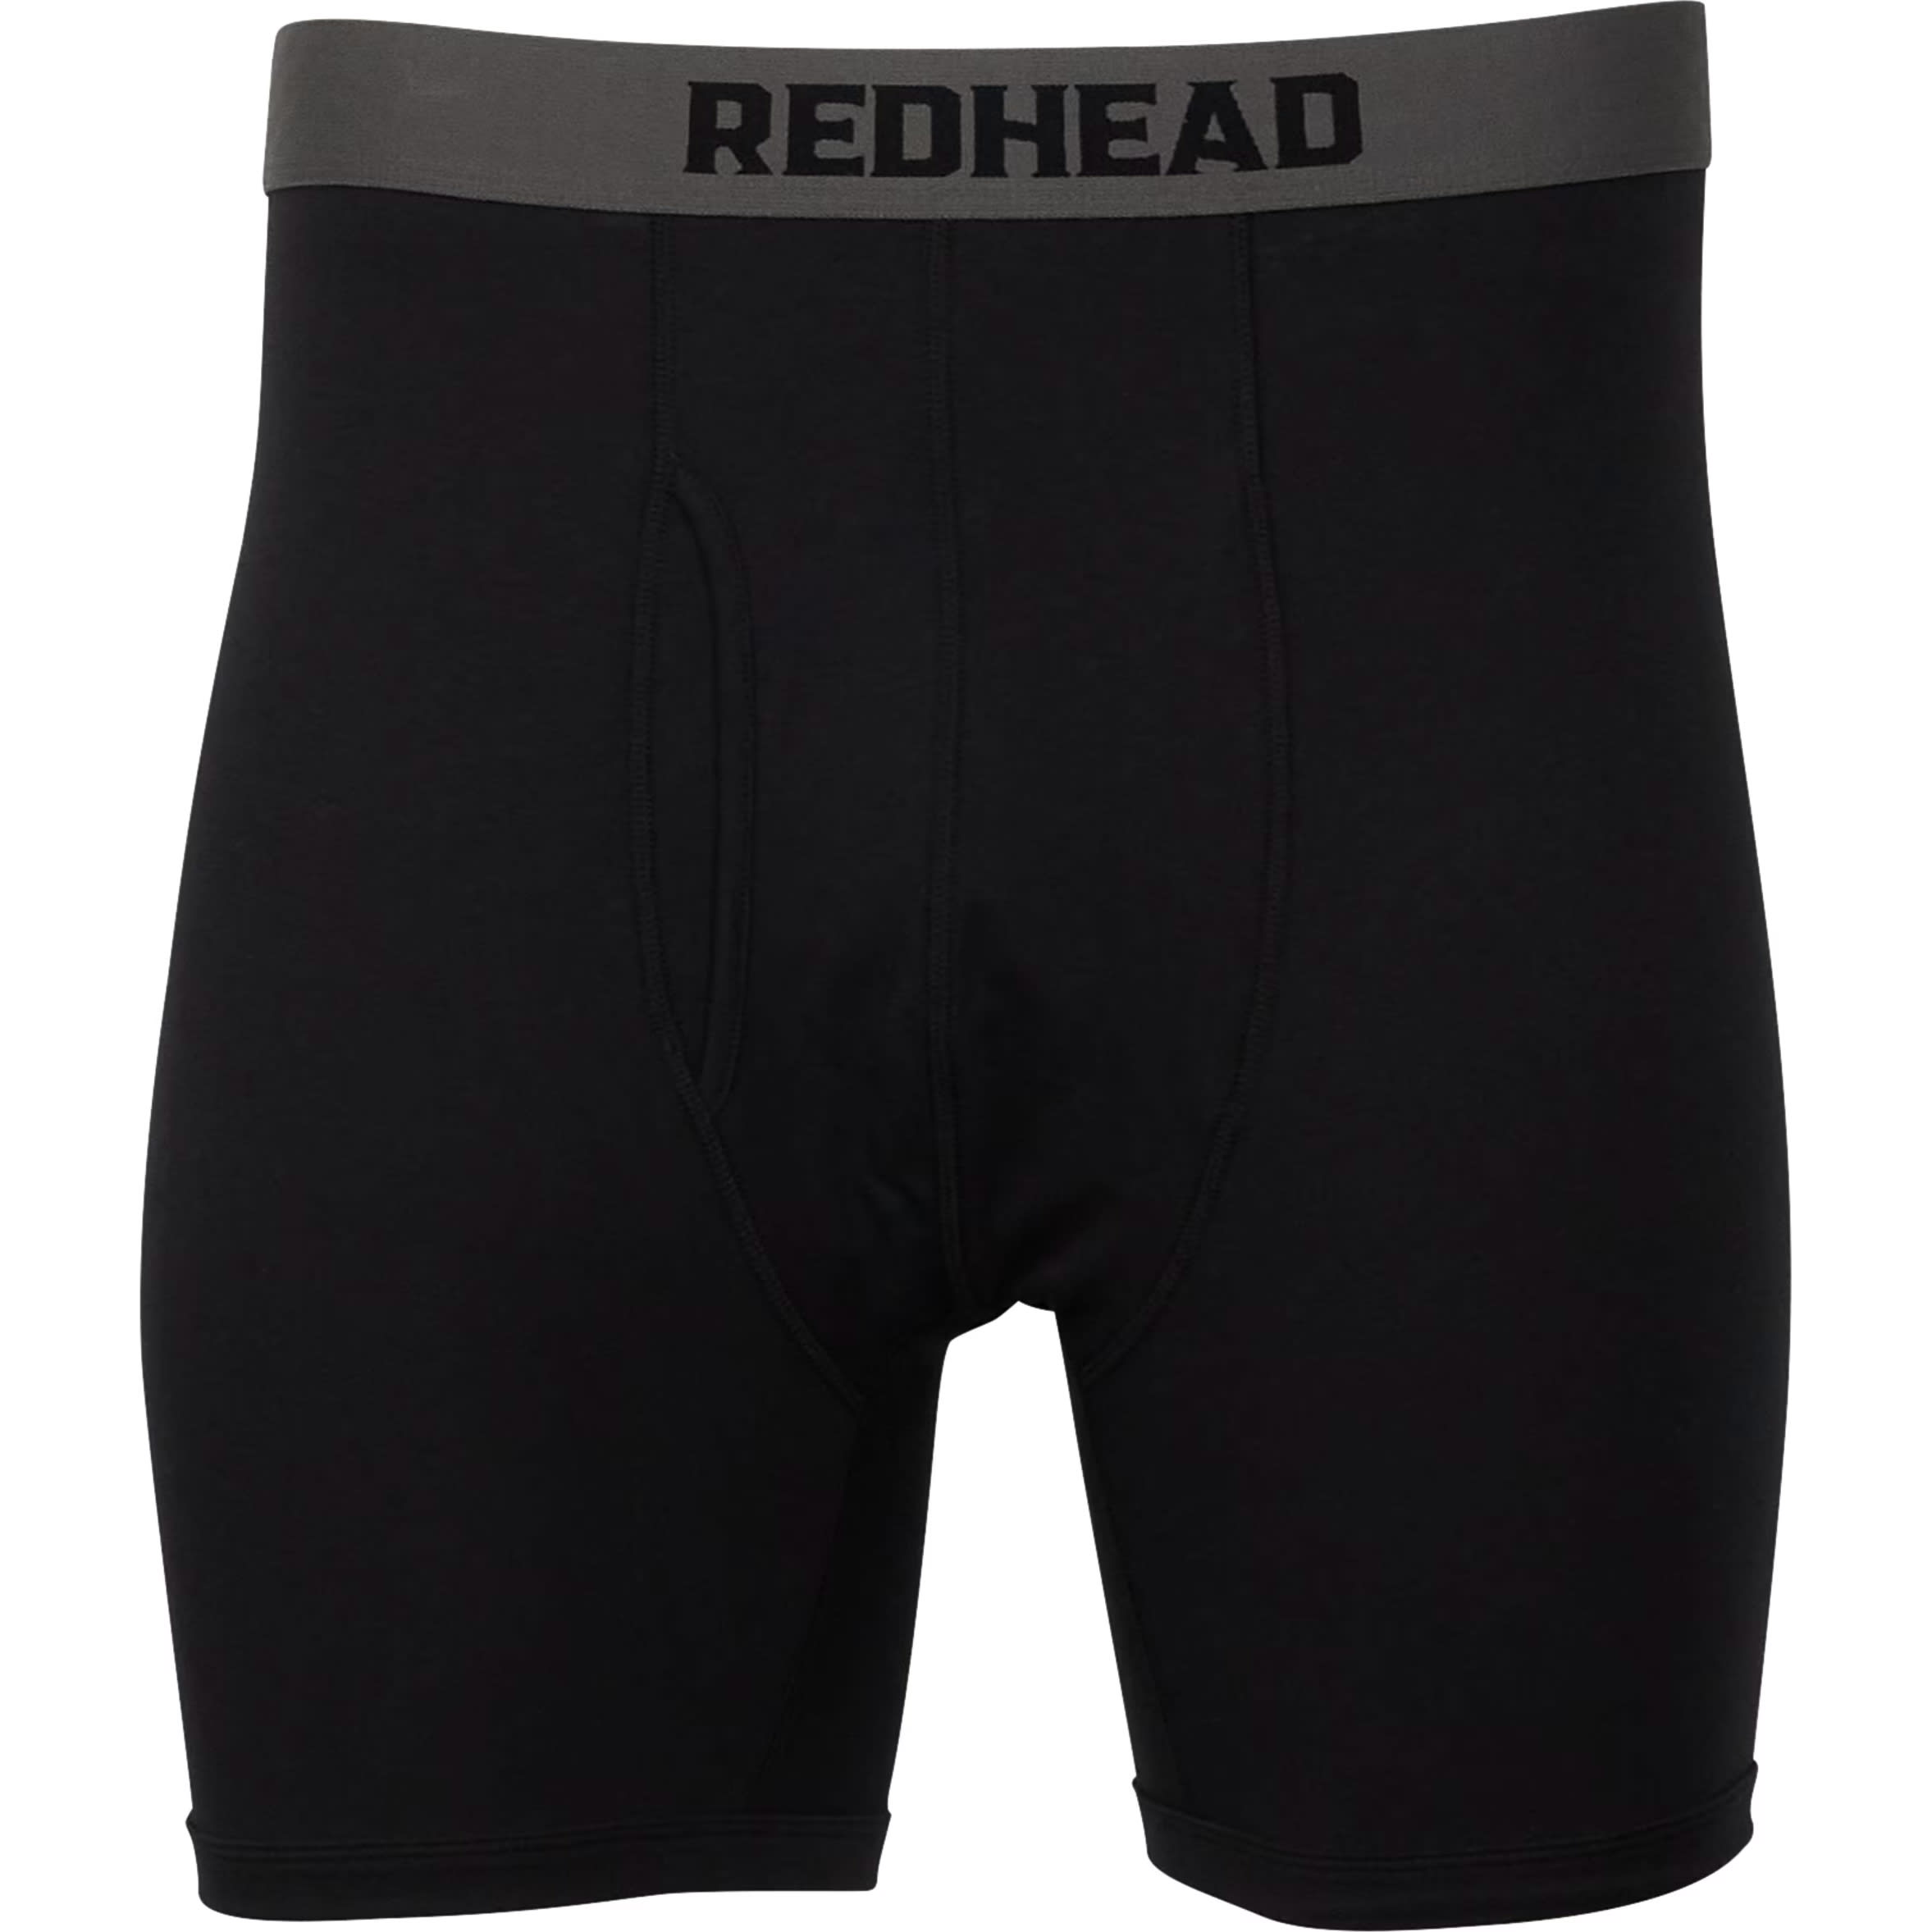 RedHead® Men’s Cotton Boxer Briefs